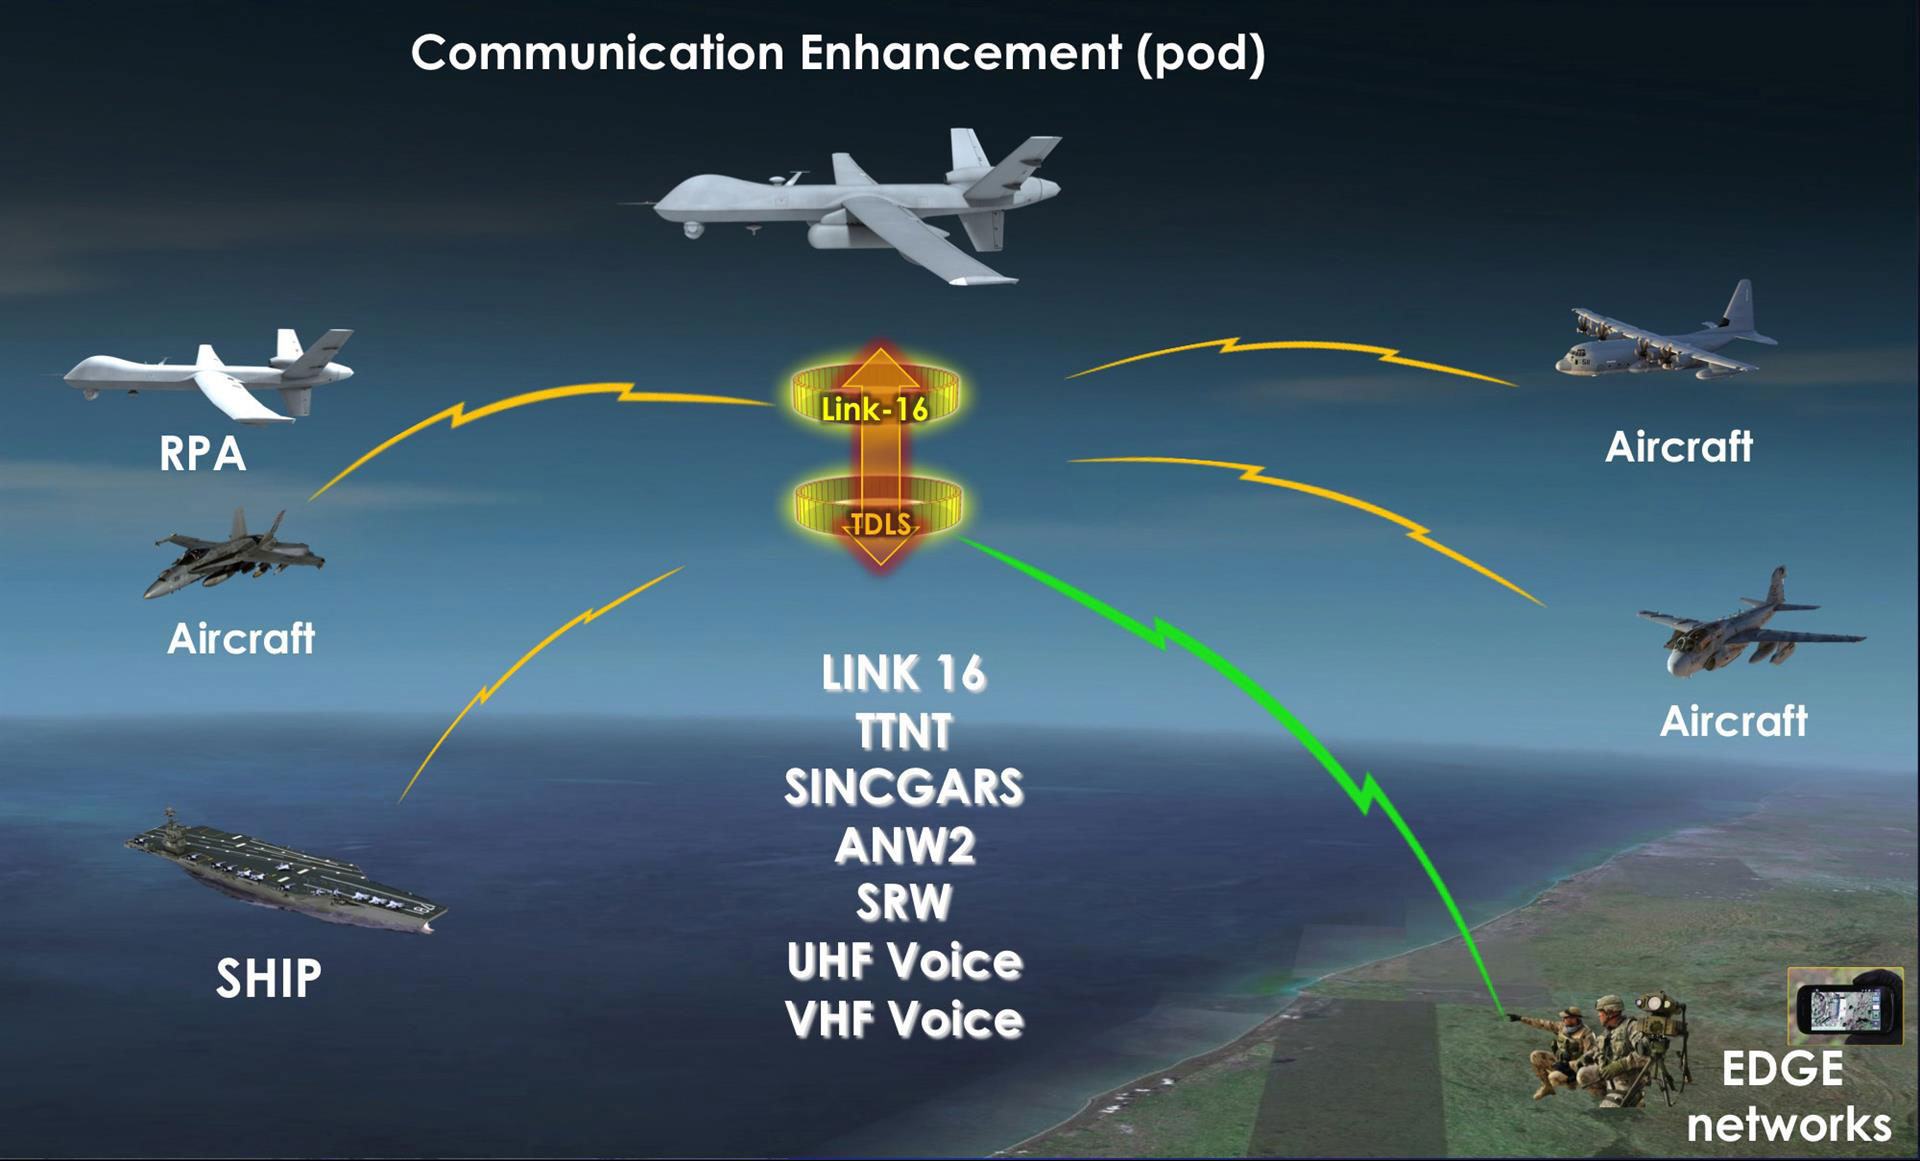 Network Centric Communications Pod (NCCP)